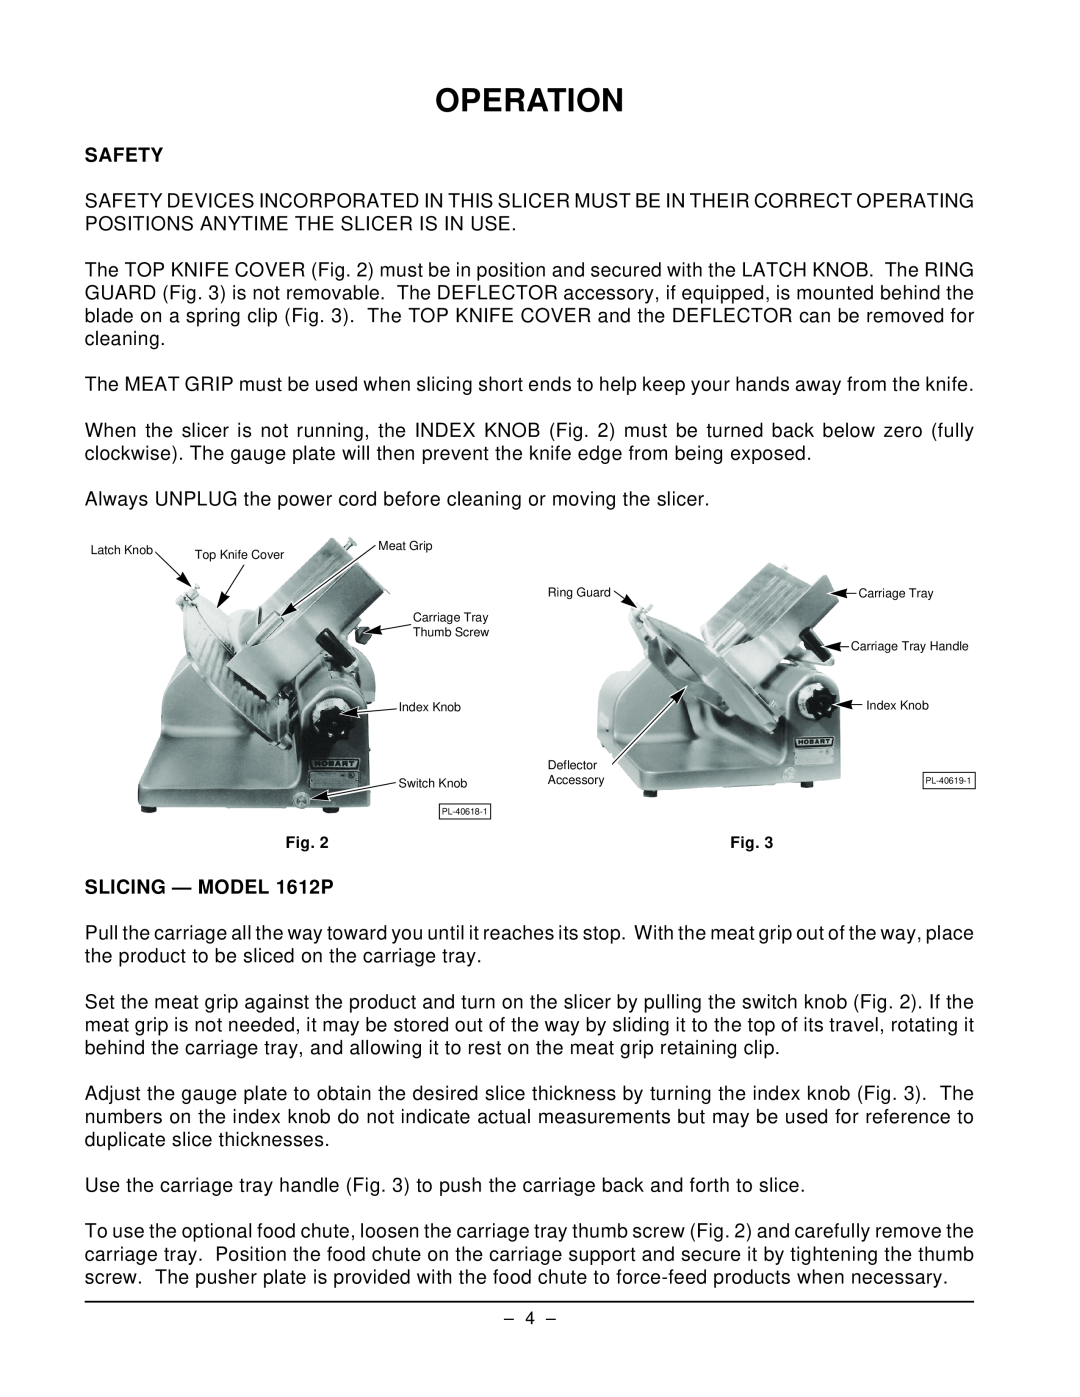 Hobart manual Operation, Safety, SLICING - MODEL 1612P 